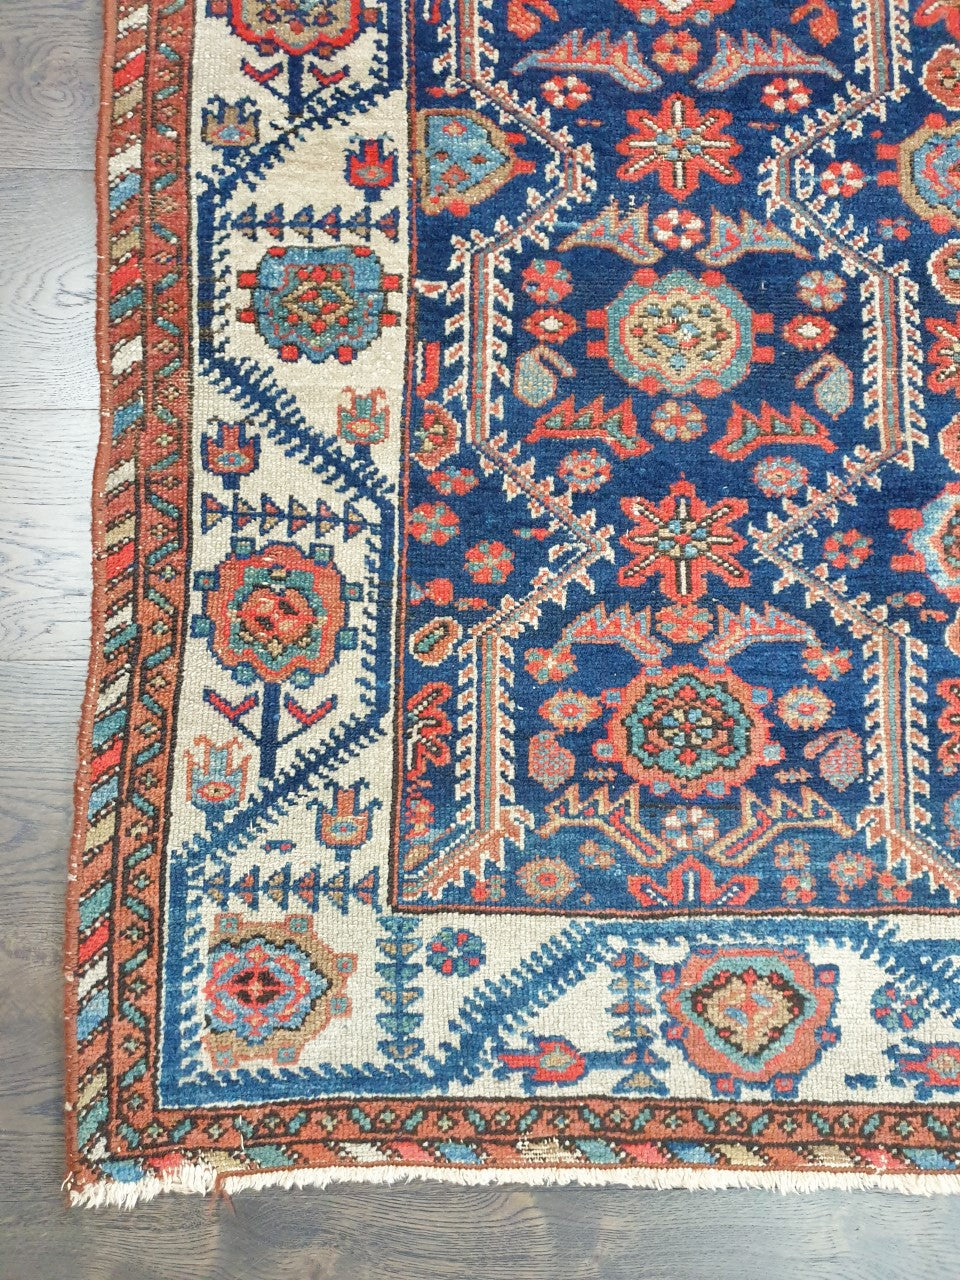 Amazing Old Antique Handmade Malayer rug - Hakiemie Rug Gallery